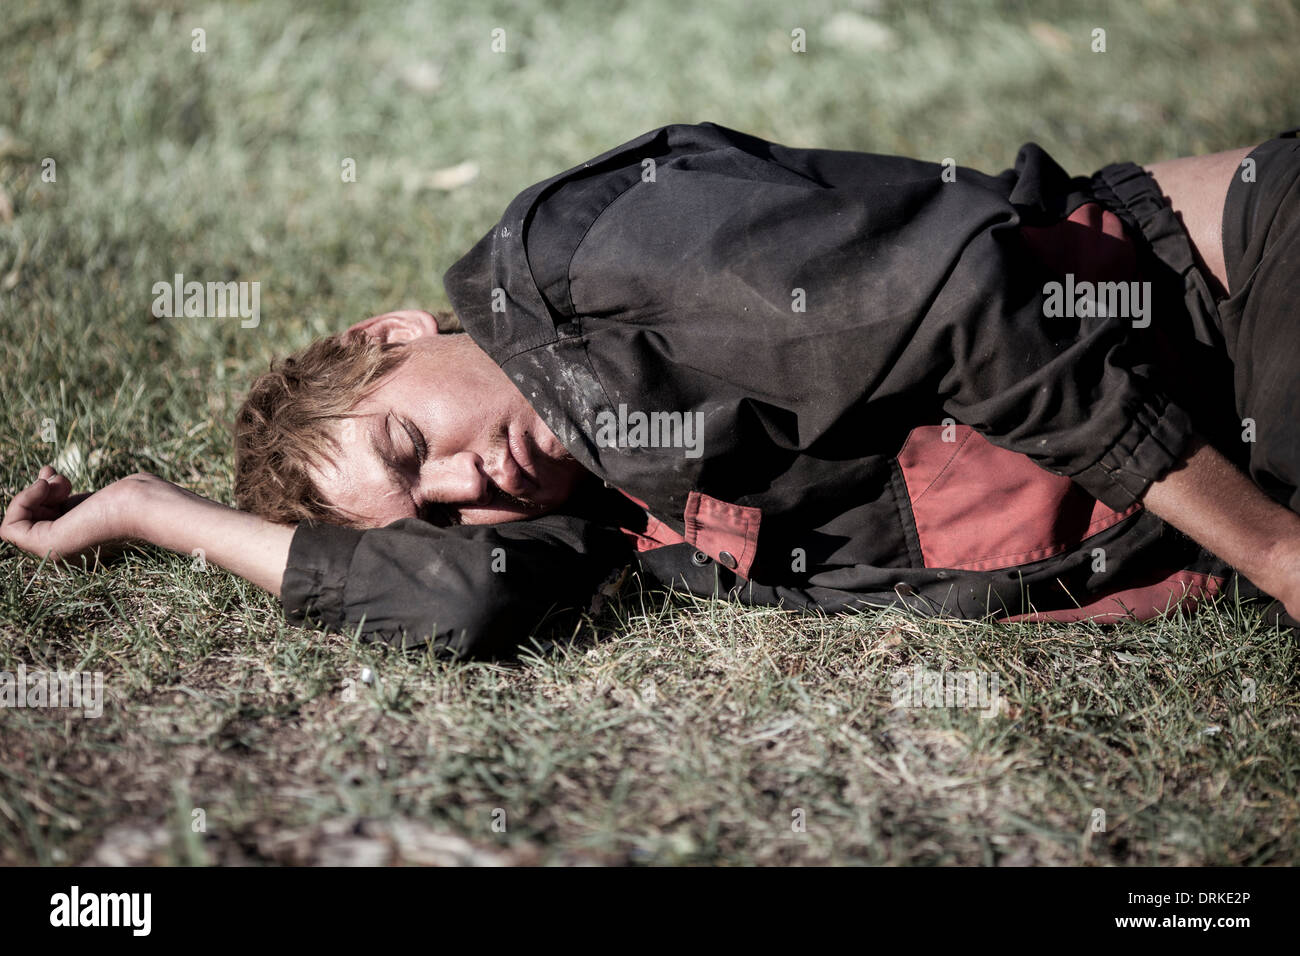 young homeless man sleeping , selective focus on eye Stock Photo